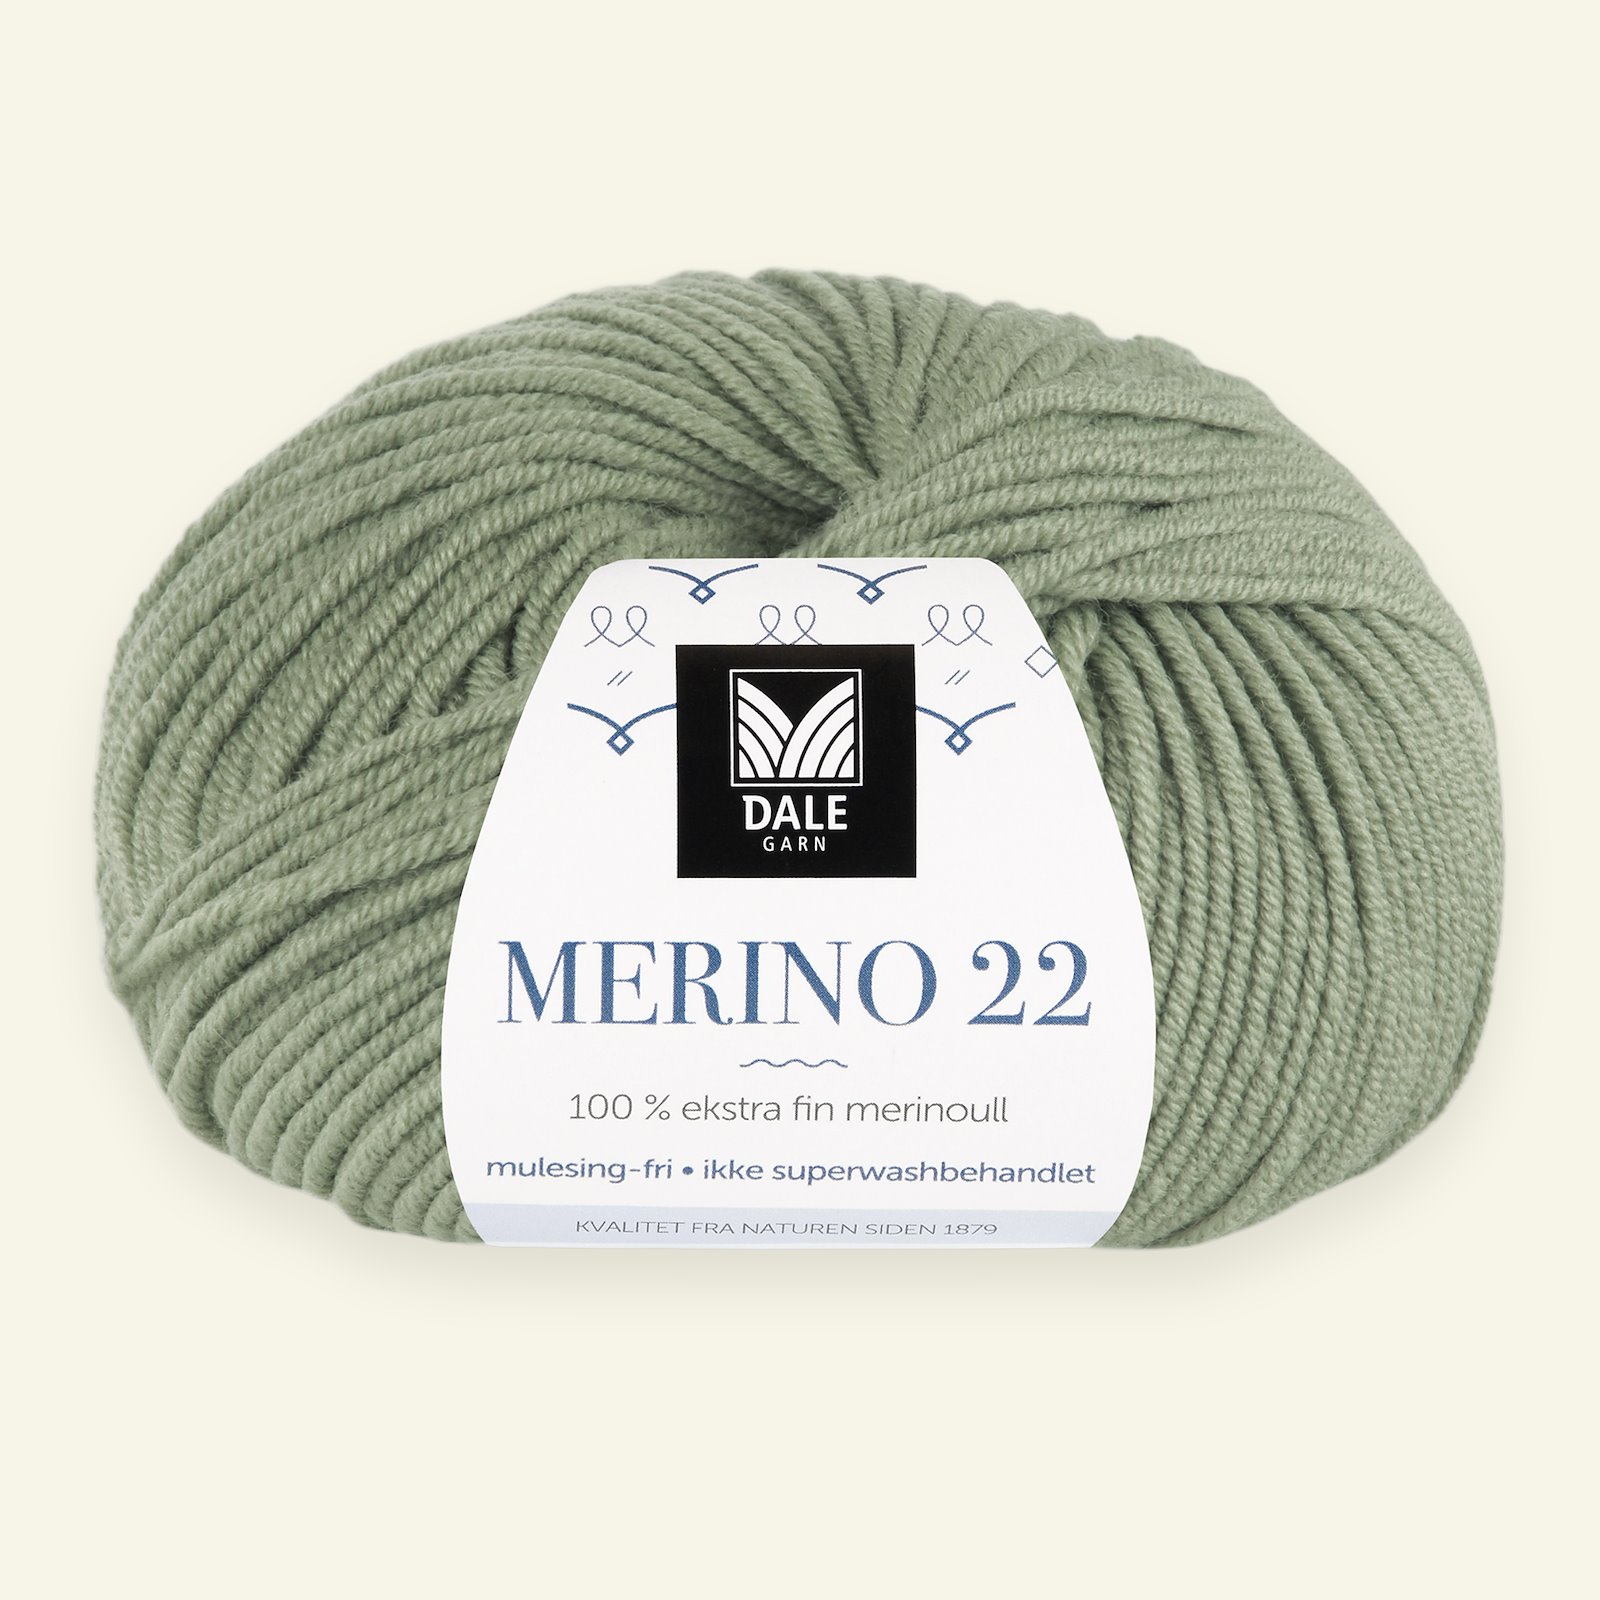 Dale Garn, 100% ekstra fint merinogarn "Merino 22", jade grøn (2013) 90000374_pack